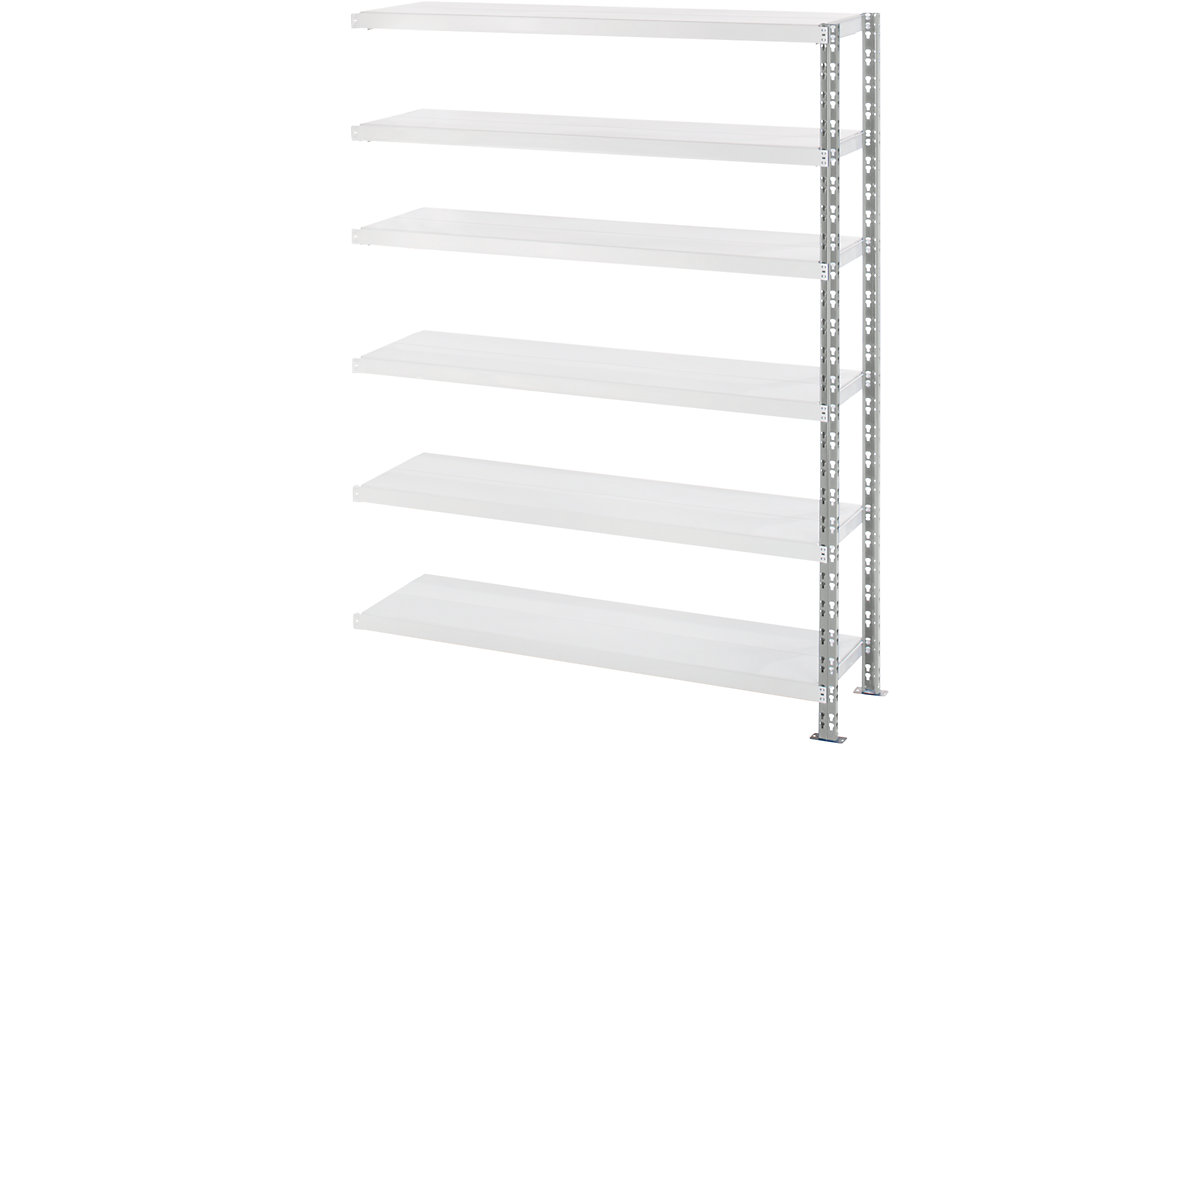 Wide span shelf unit with sheet steel shelves, depth 500 mm, extension shelf unit, HxW 1976 x 1525 mm